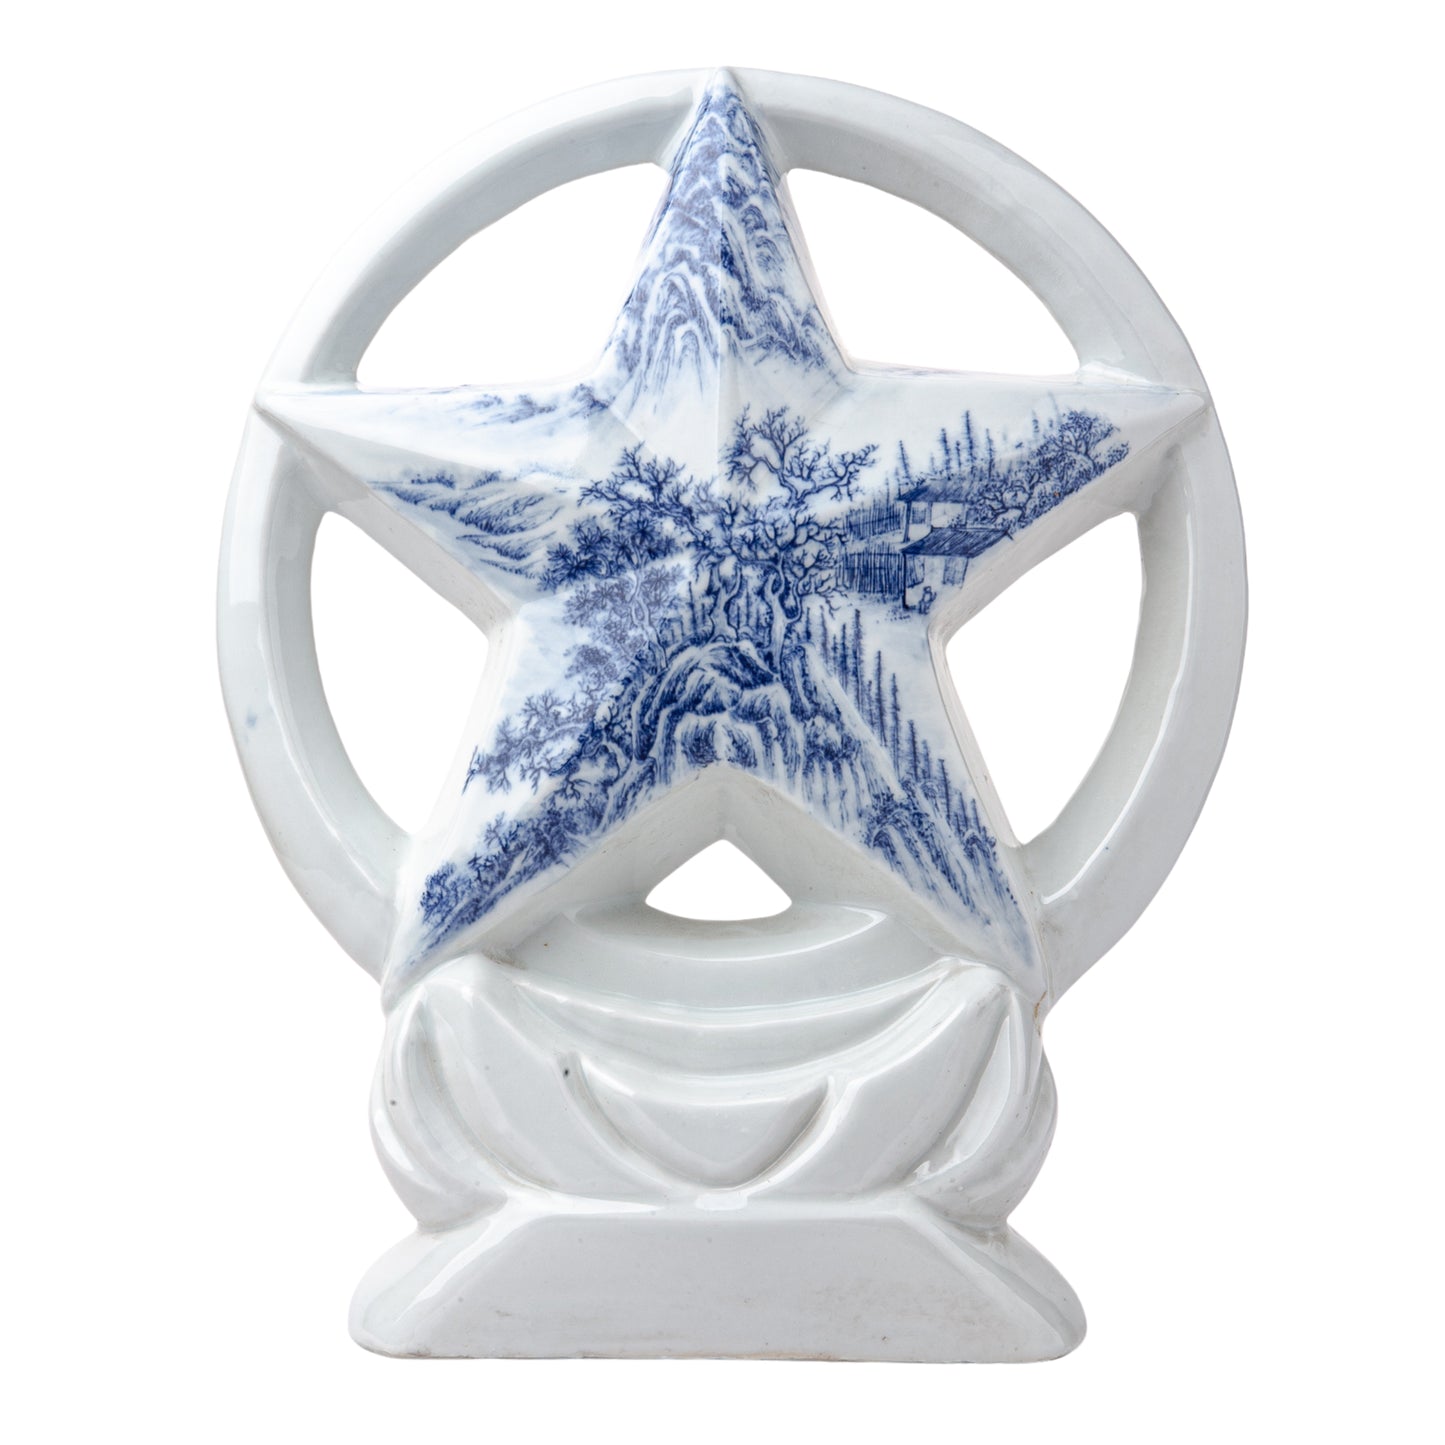 Conceptual Ceramics collection - All Stars series